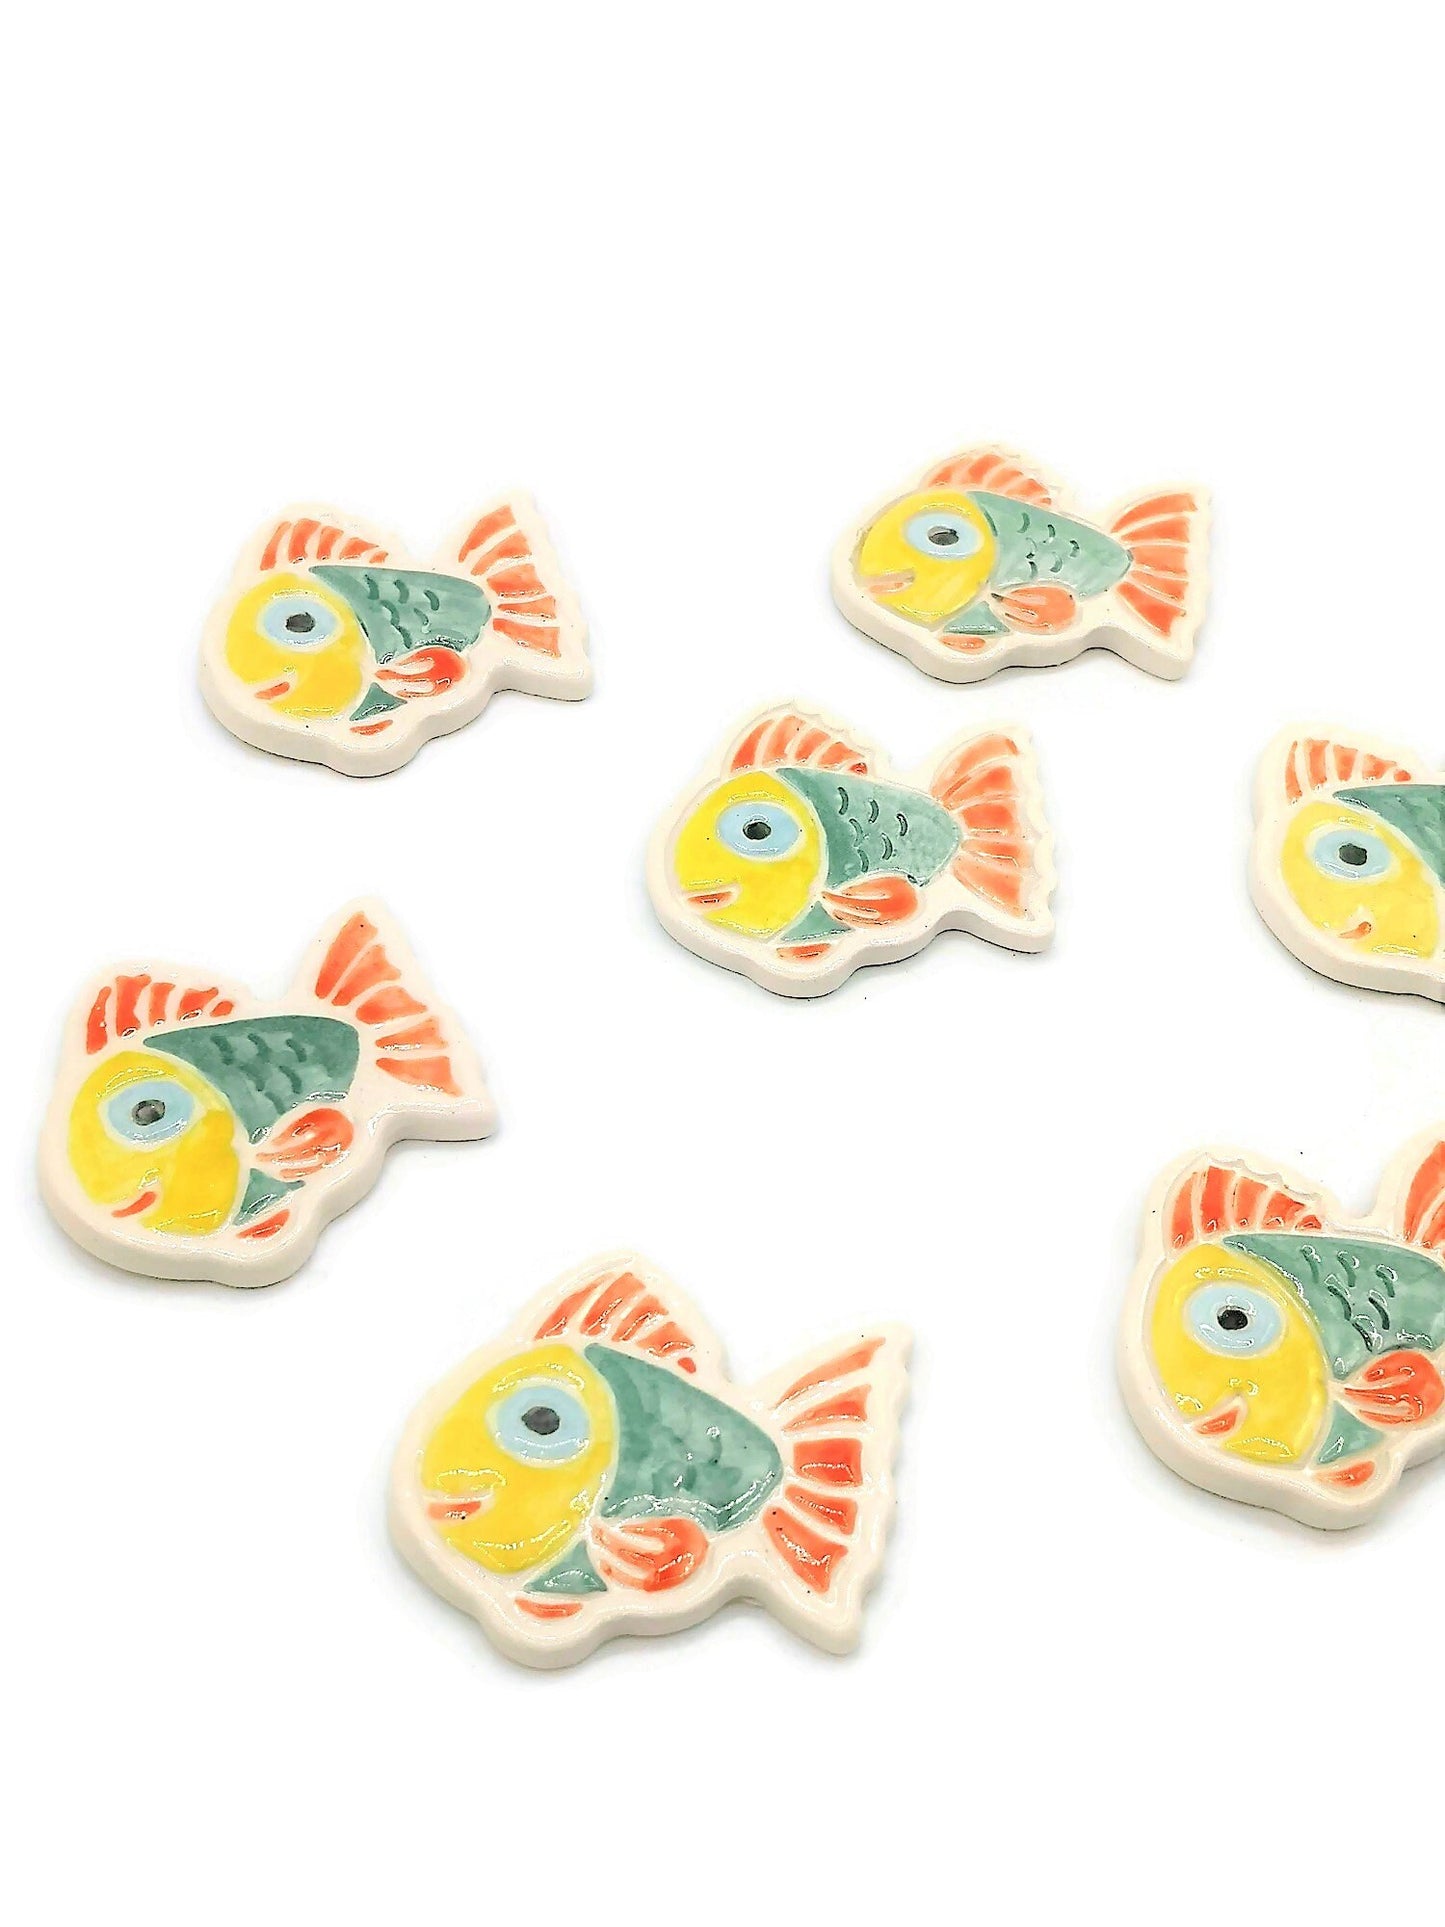 Handmade Ceramic Fish Magnet, Colorful Refrigerator Magnet, Beach Fridge Magnet Cute For Decoration, Housewarming Gift First Home - Ceramica Ana Rafael